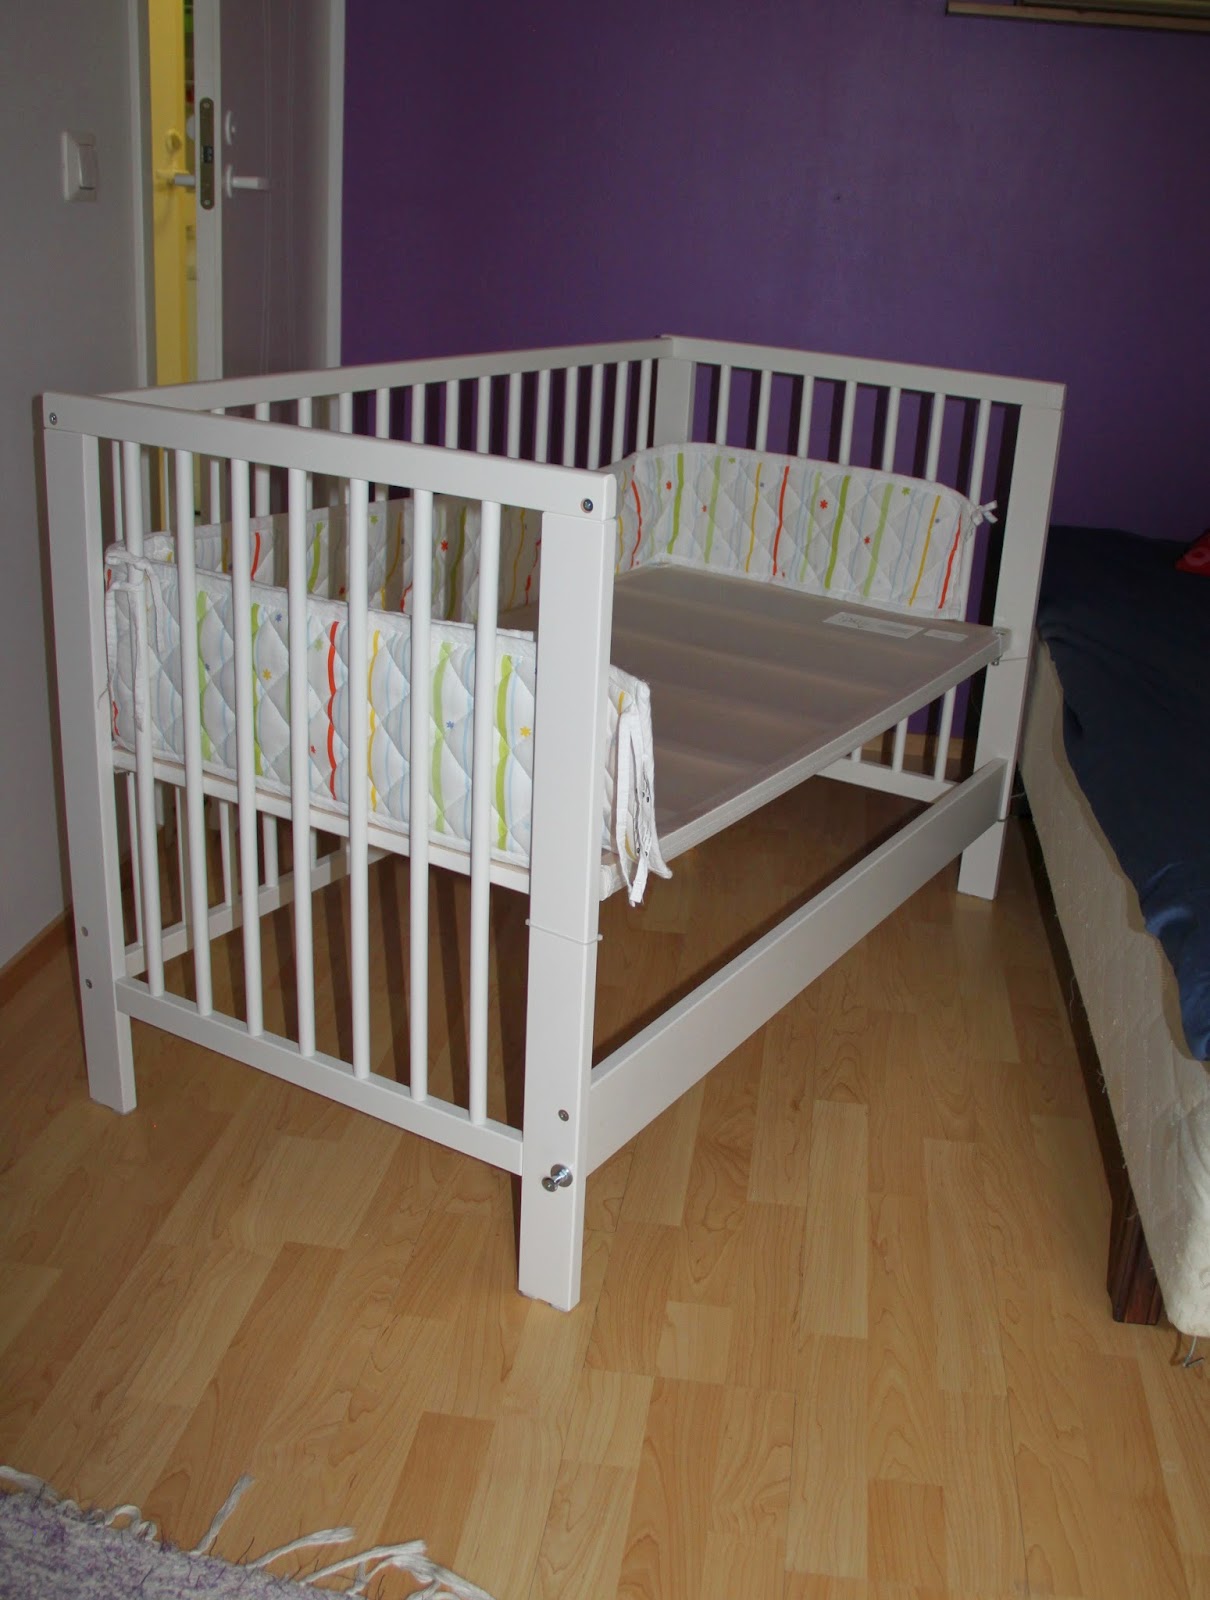 Stun Gevaar Uitstekend Petriojk stuff: Ikea hack - Gulliver baby crib meets an engineer